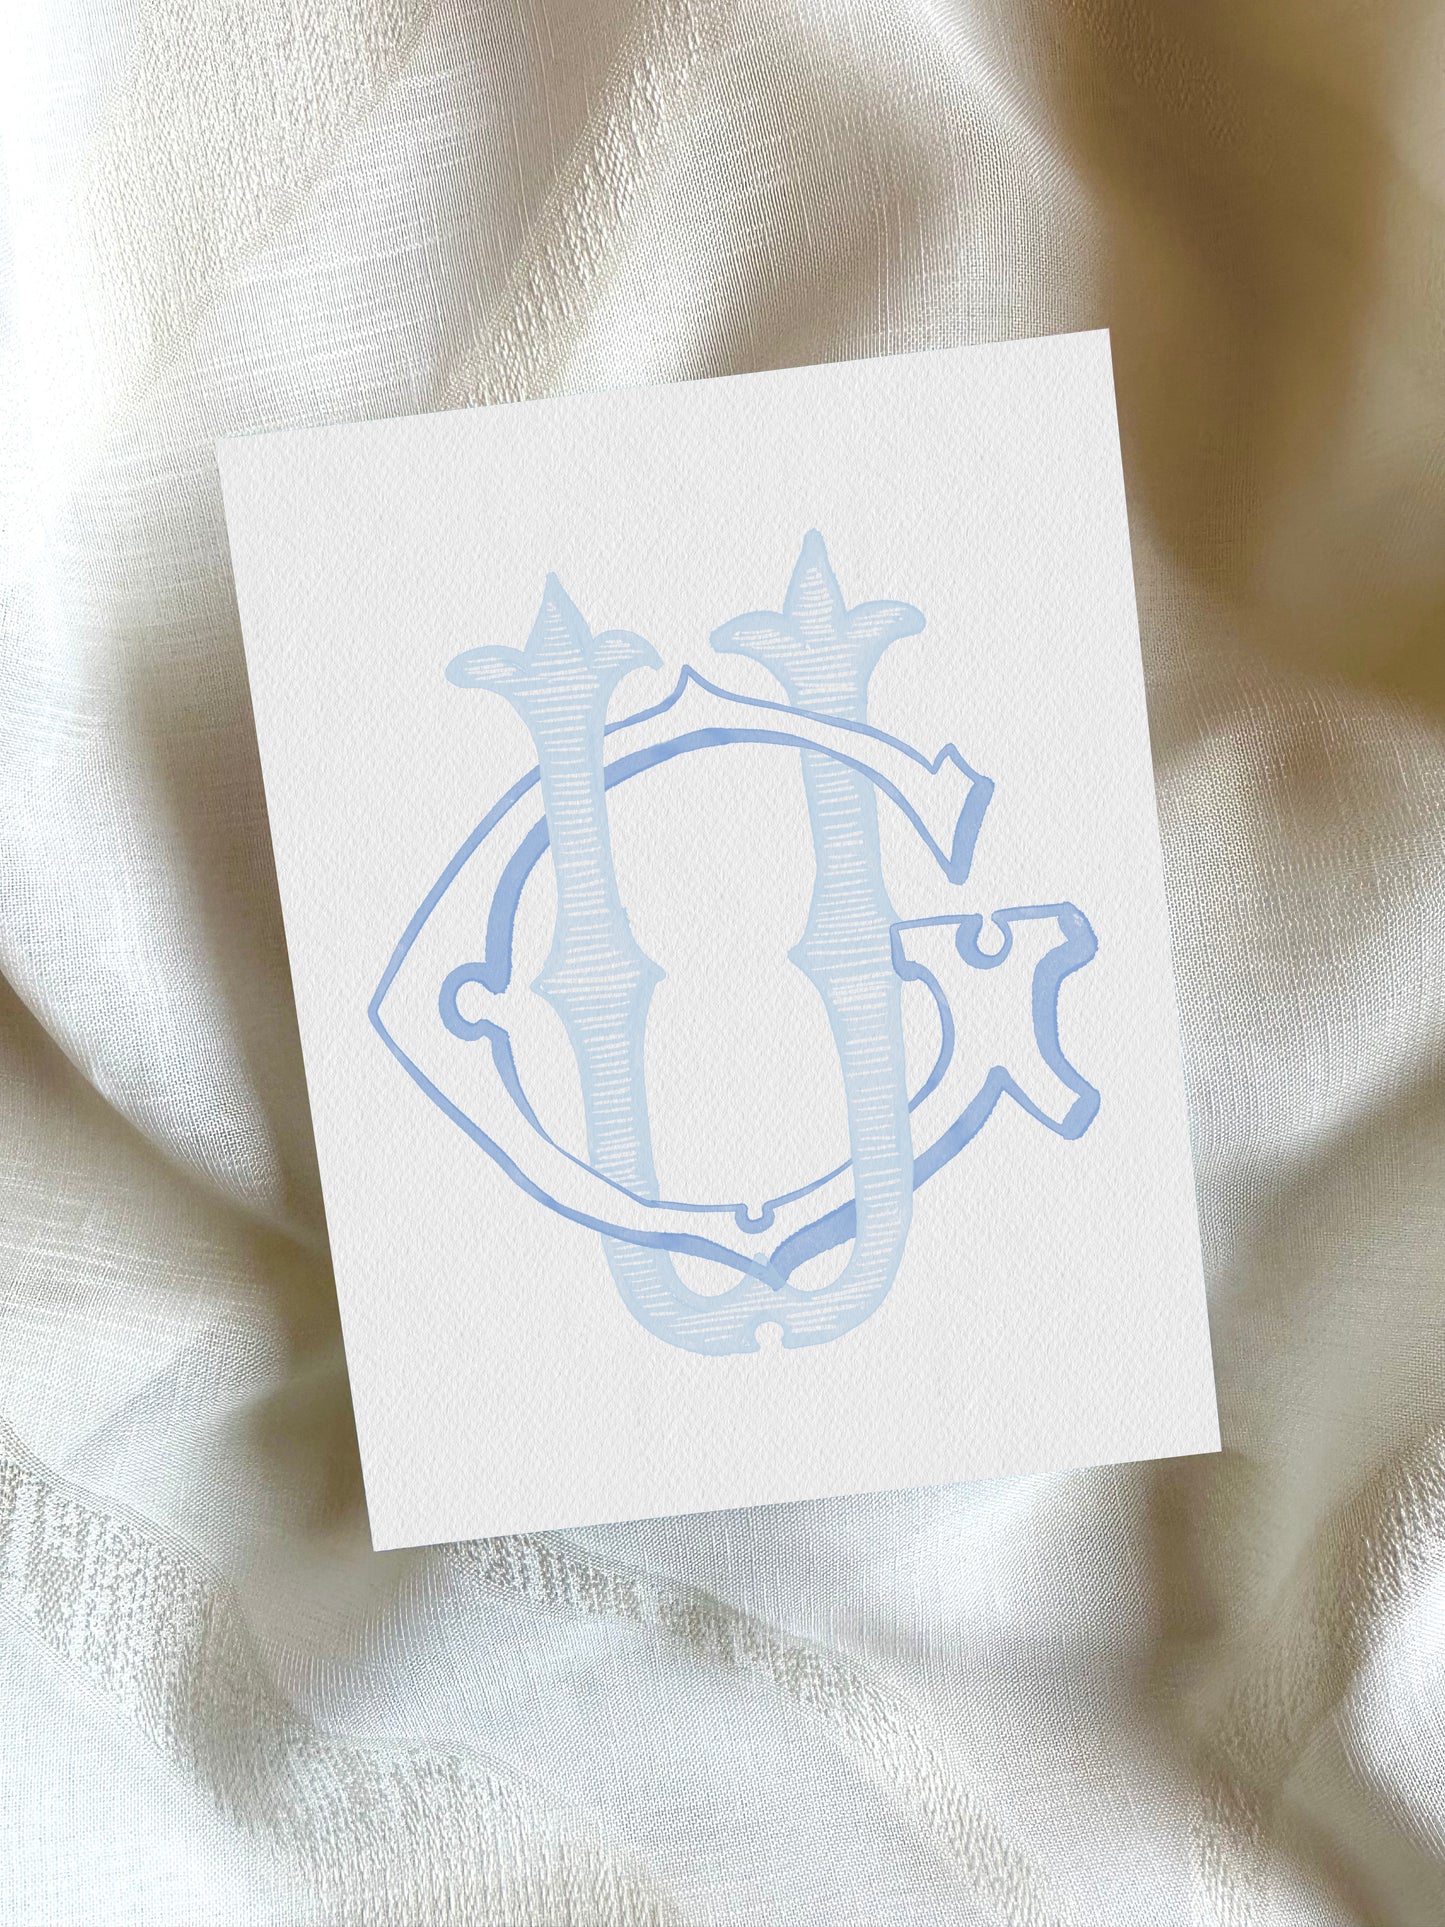 2 Letter Monogram with Letters GU UG | Digital Download - Wedding Monogram SVG, Personal Logo, Wedding Logo for Wedding Invitations The Wedding Crest Lab